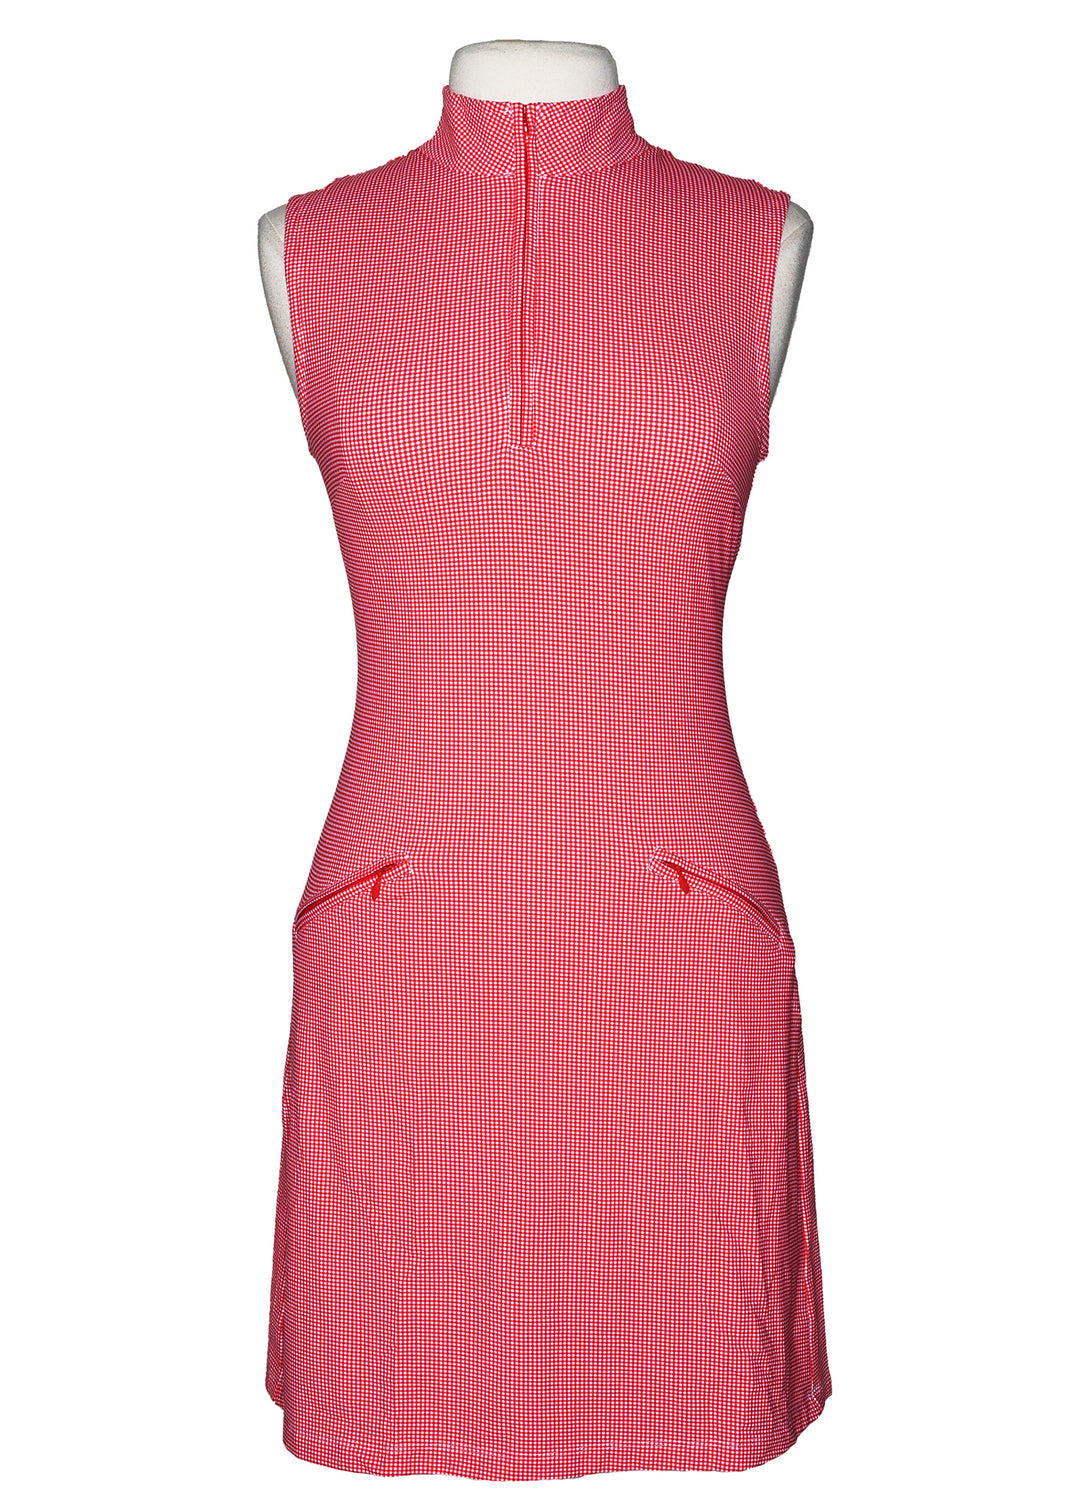 IBKUL SL Mini Check Dress - Red - Size Small - Skorzie